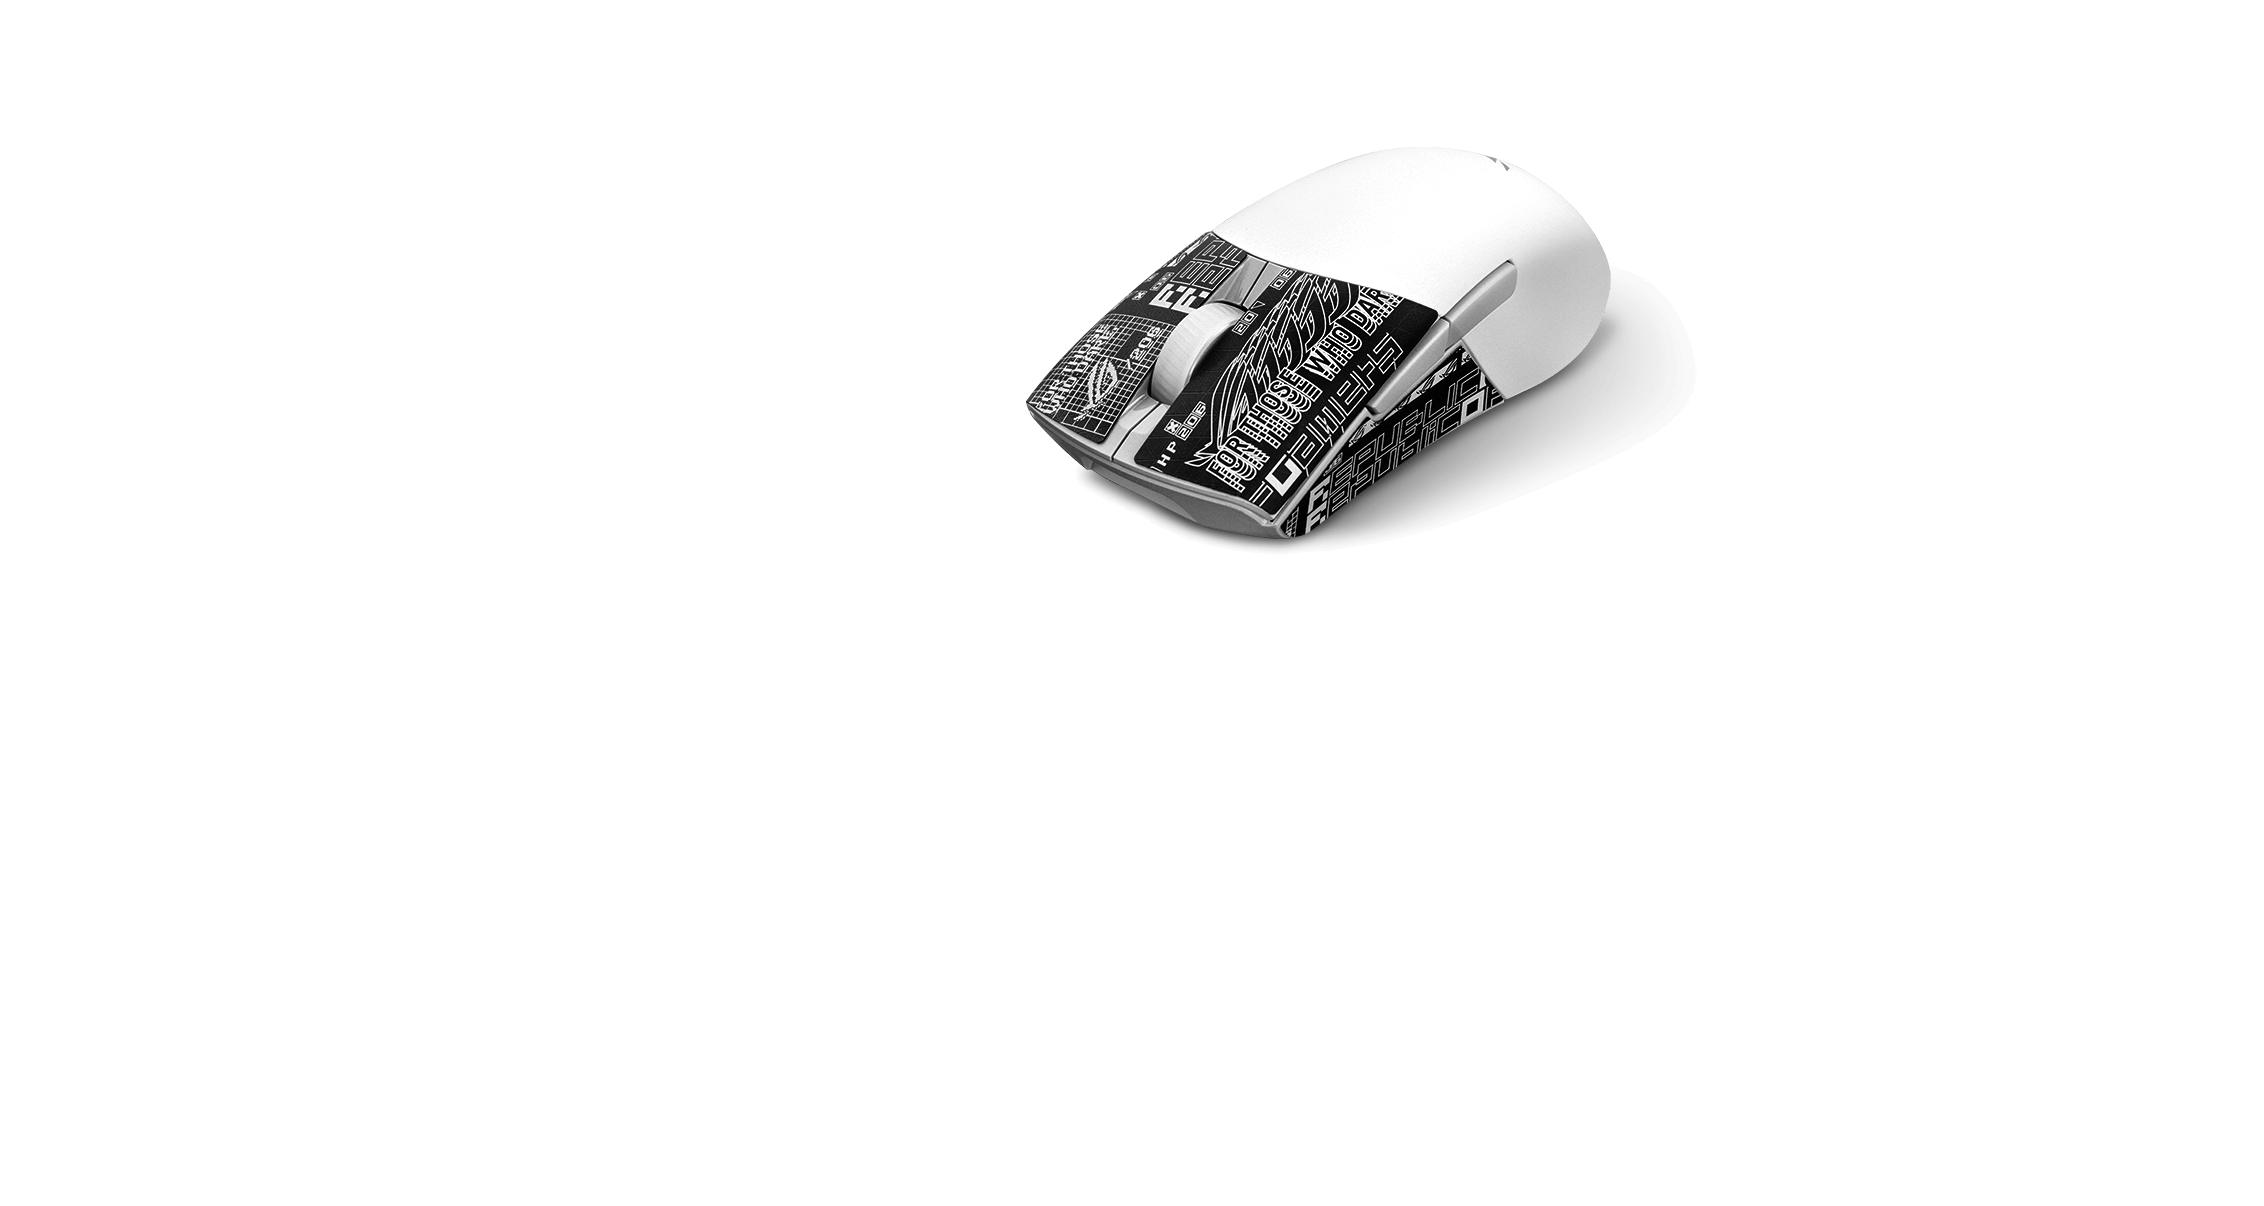 月光白 ROG月刃无线AimPoint 与 ROG 图案的鼠标握持贴布